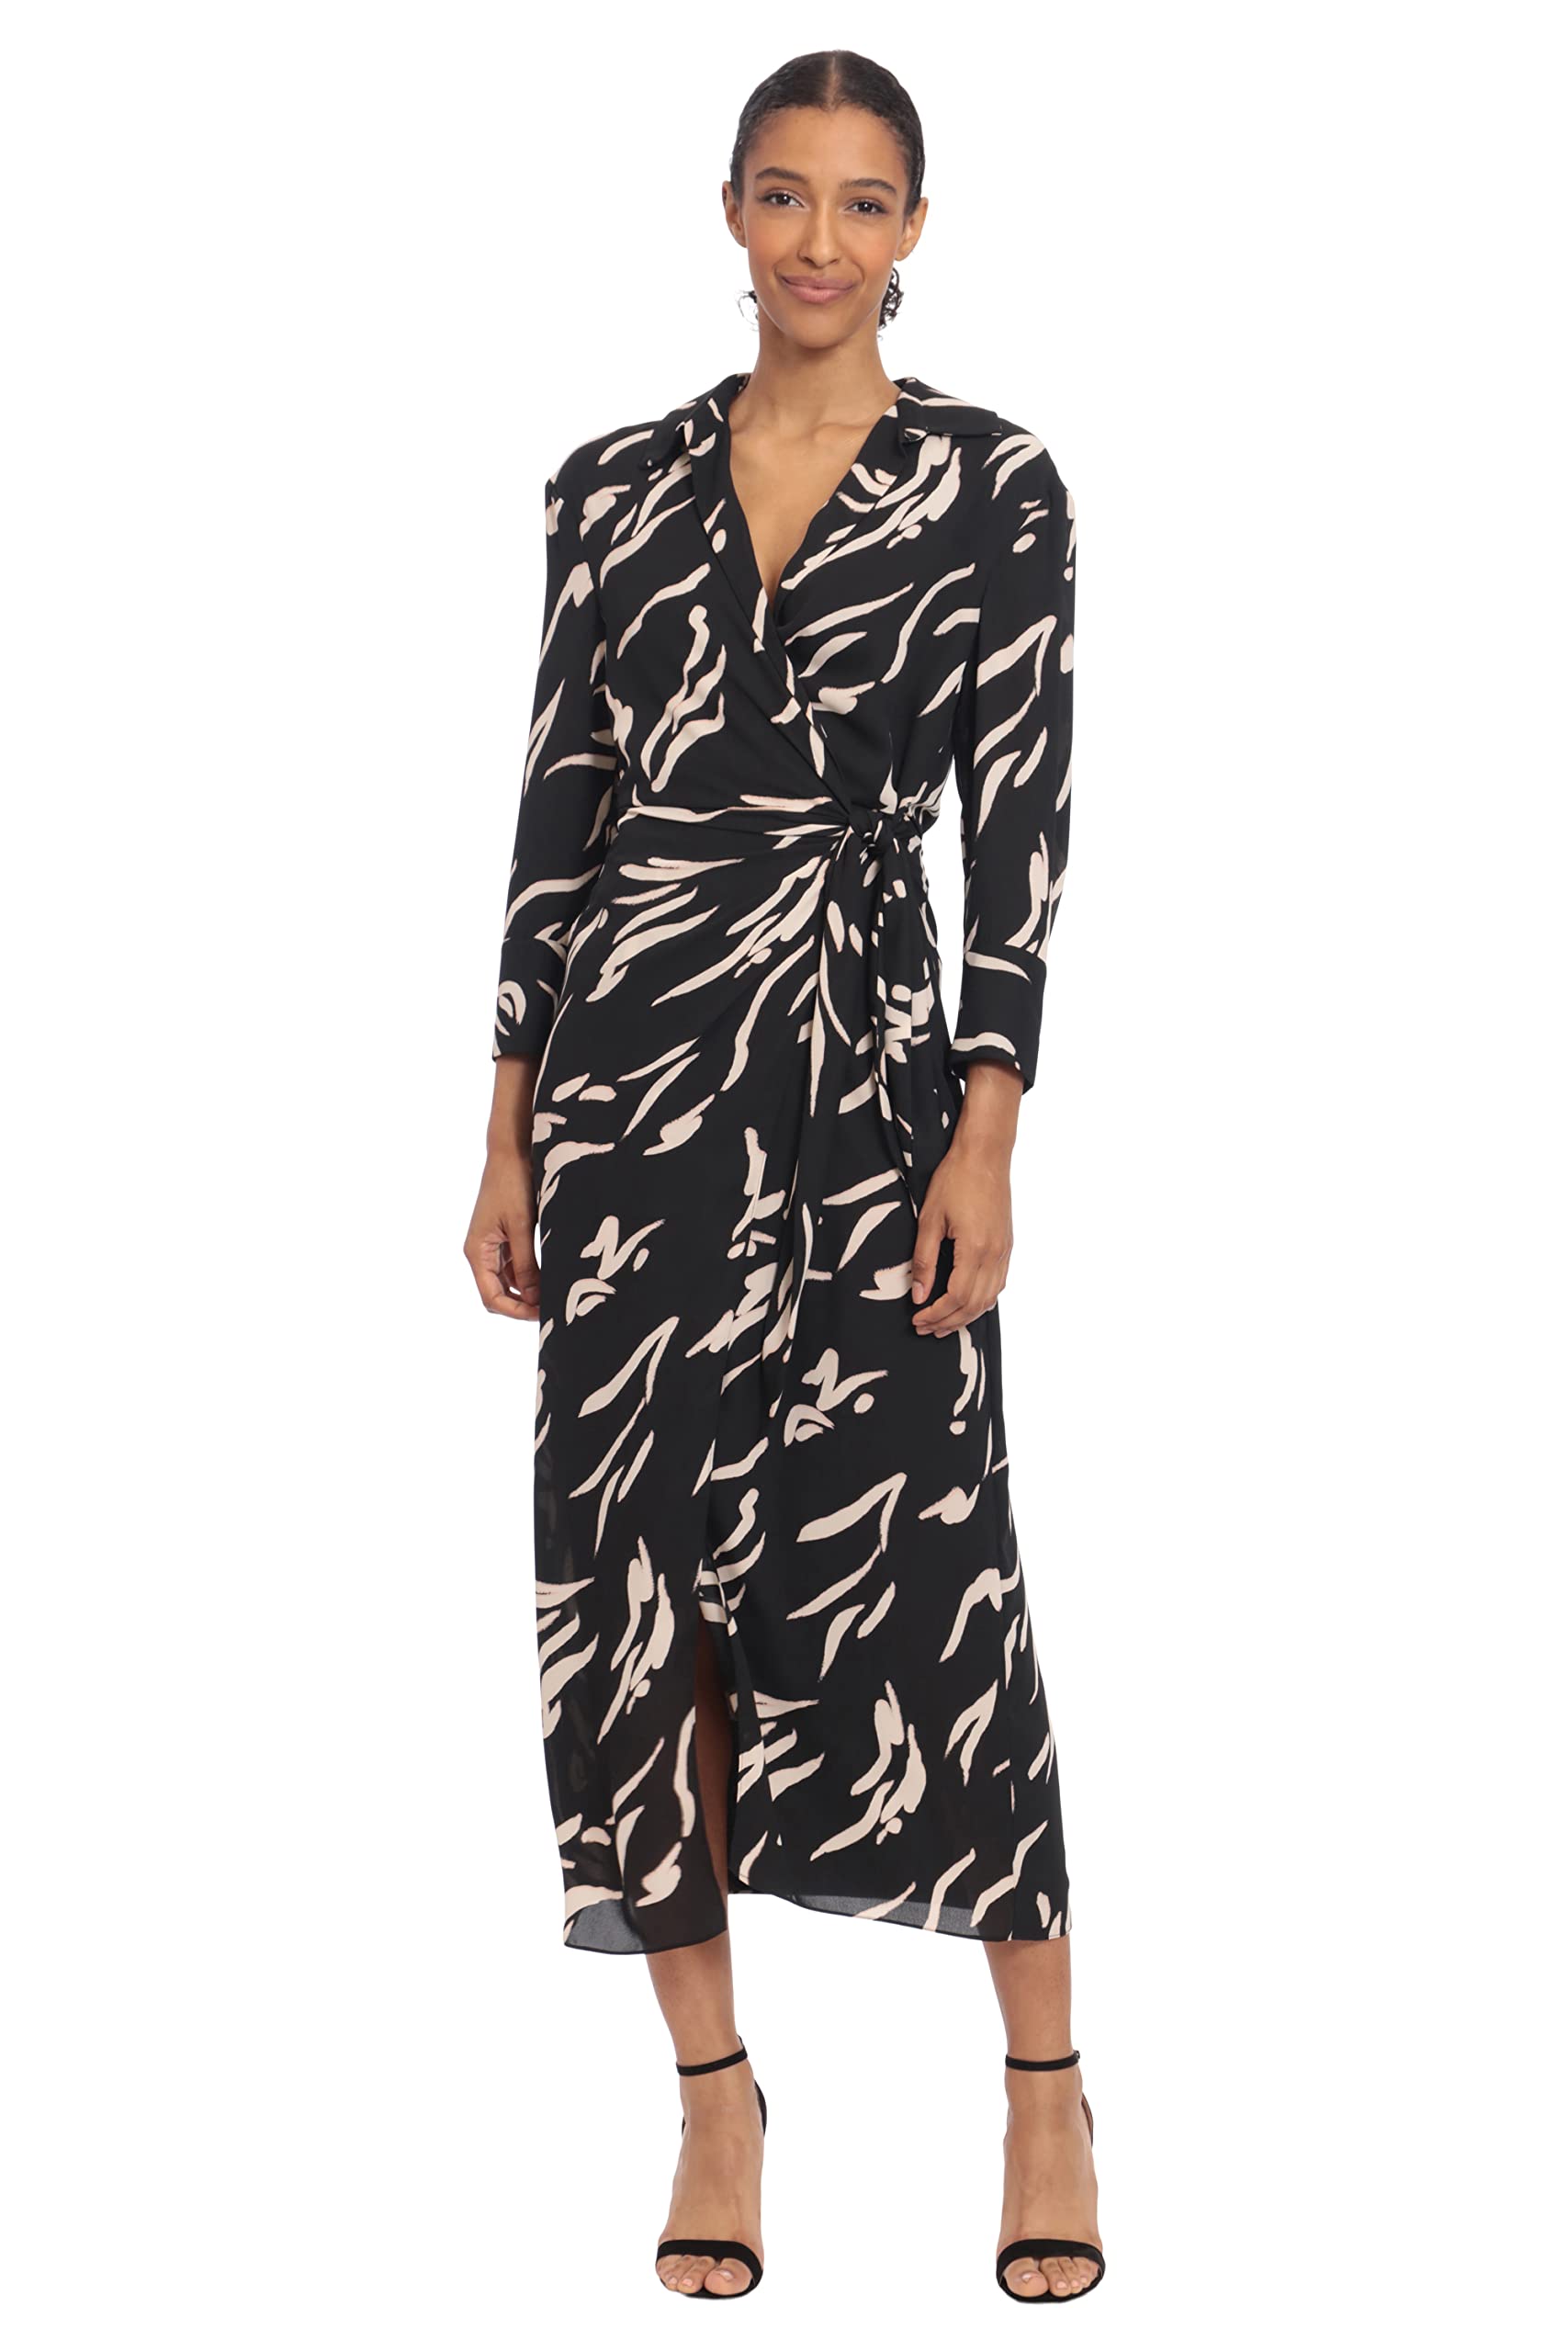 Donna Morgan Women's Long Sleeve Midi Wrap Dress